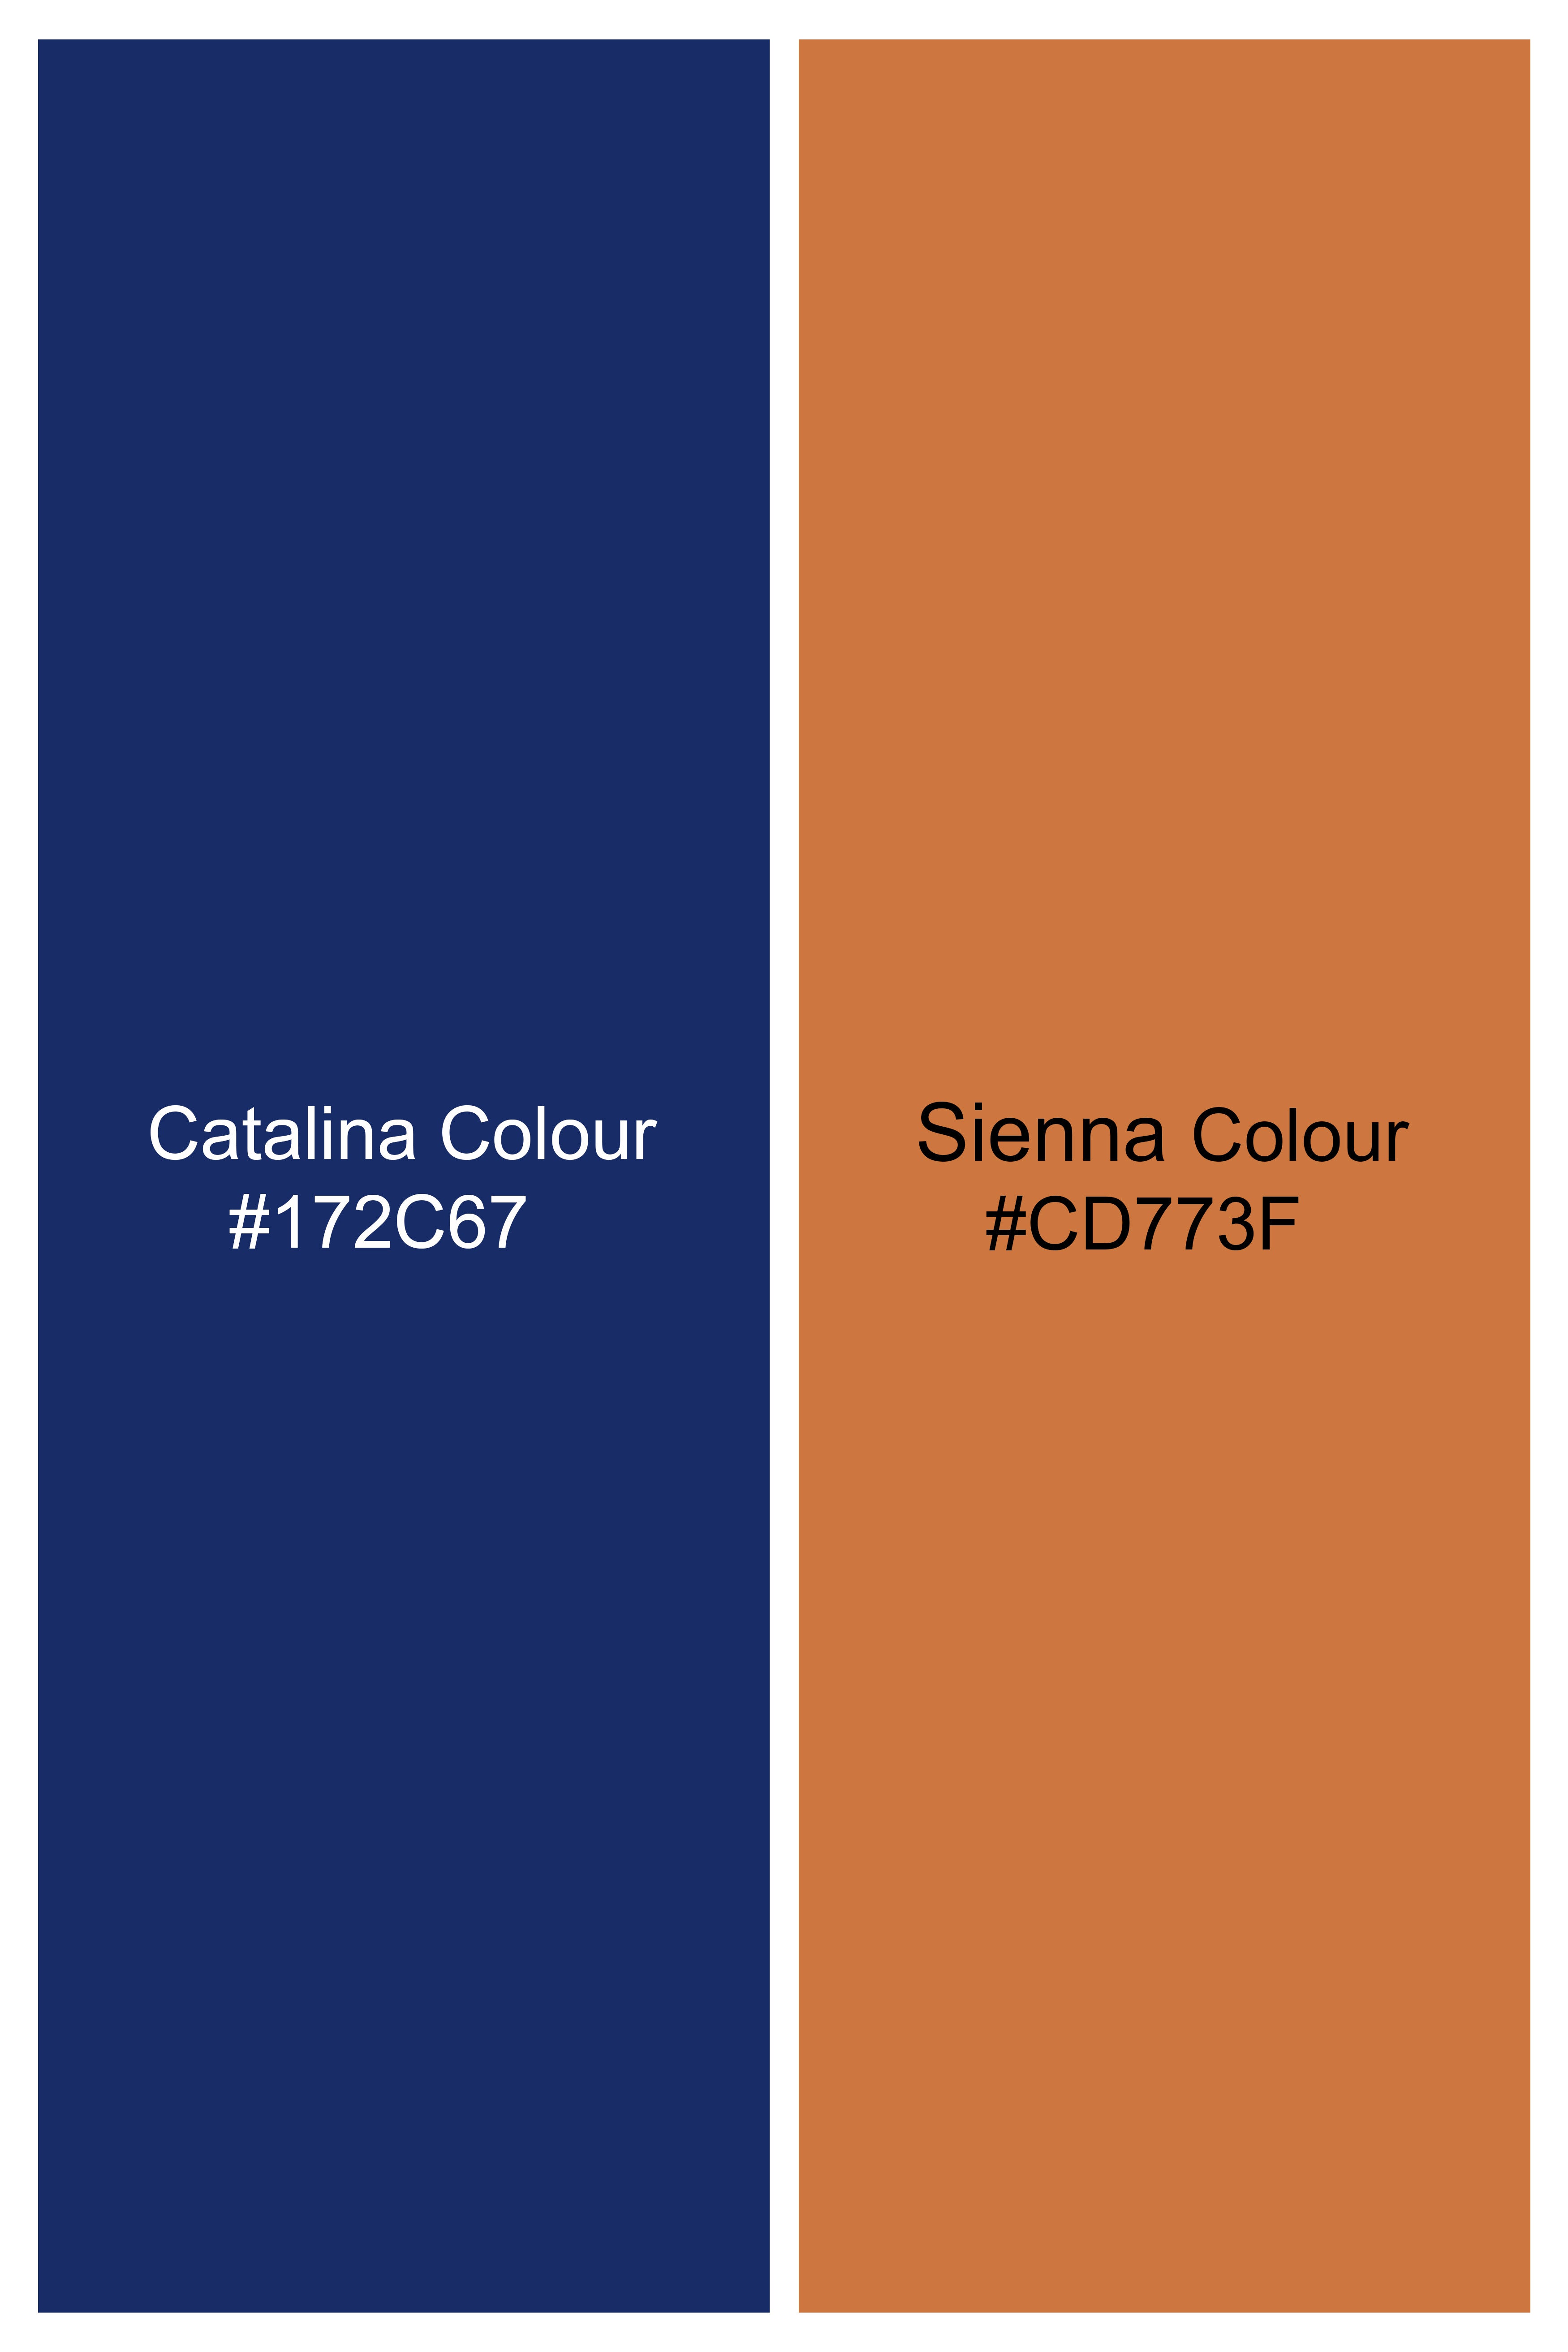 Catalina Blue and Sienna Orange Wool Rich Designer Suit ST2943-SB-D46-36, ST2943-SB-D46-38, ST2943-SB-D46-40, ST2943-SB-D46-42, ST2943-SB-D46-44, ST2943-SB-D46-46, ST2943-SB-D46-48, ST2943-SB-D46-50, ST2943-SB-D46-52, ST2943-SB-D46-54, ST2943-SB-D46-56, ST2943-SB-D46-58, ST2943-SB-D46-60